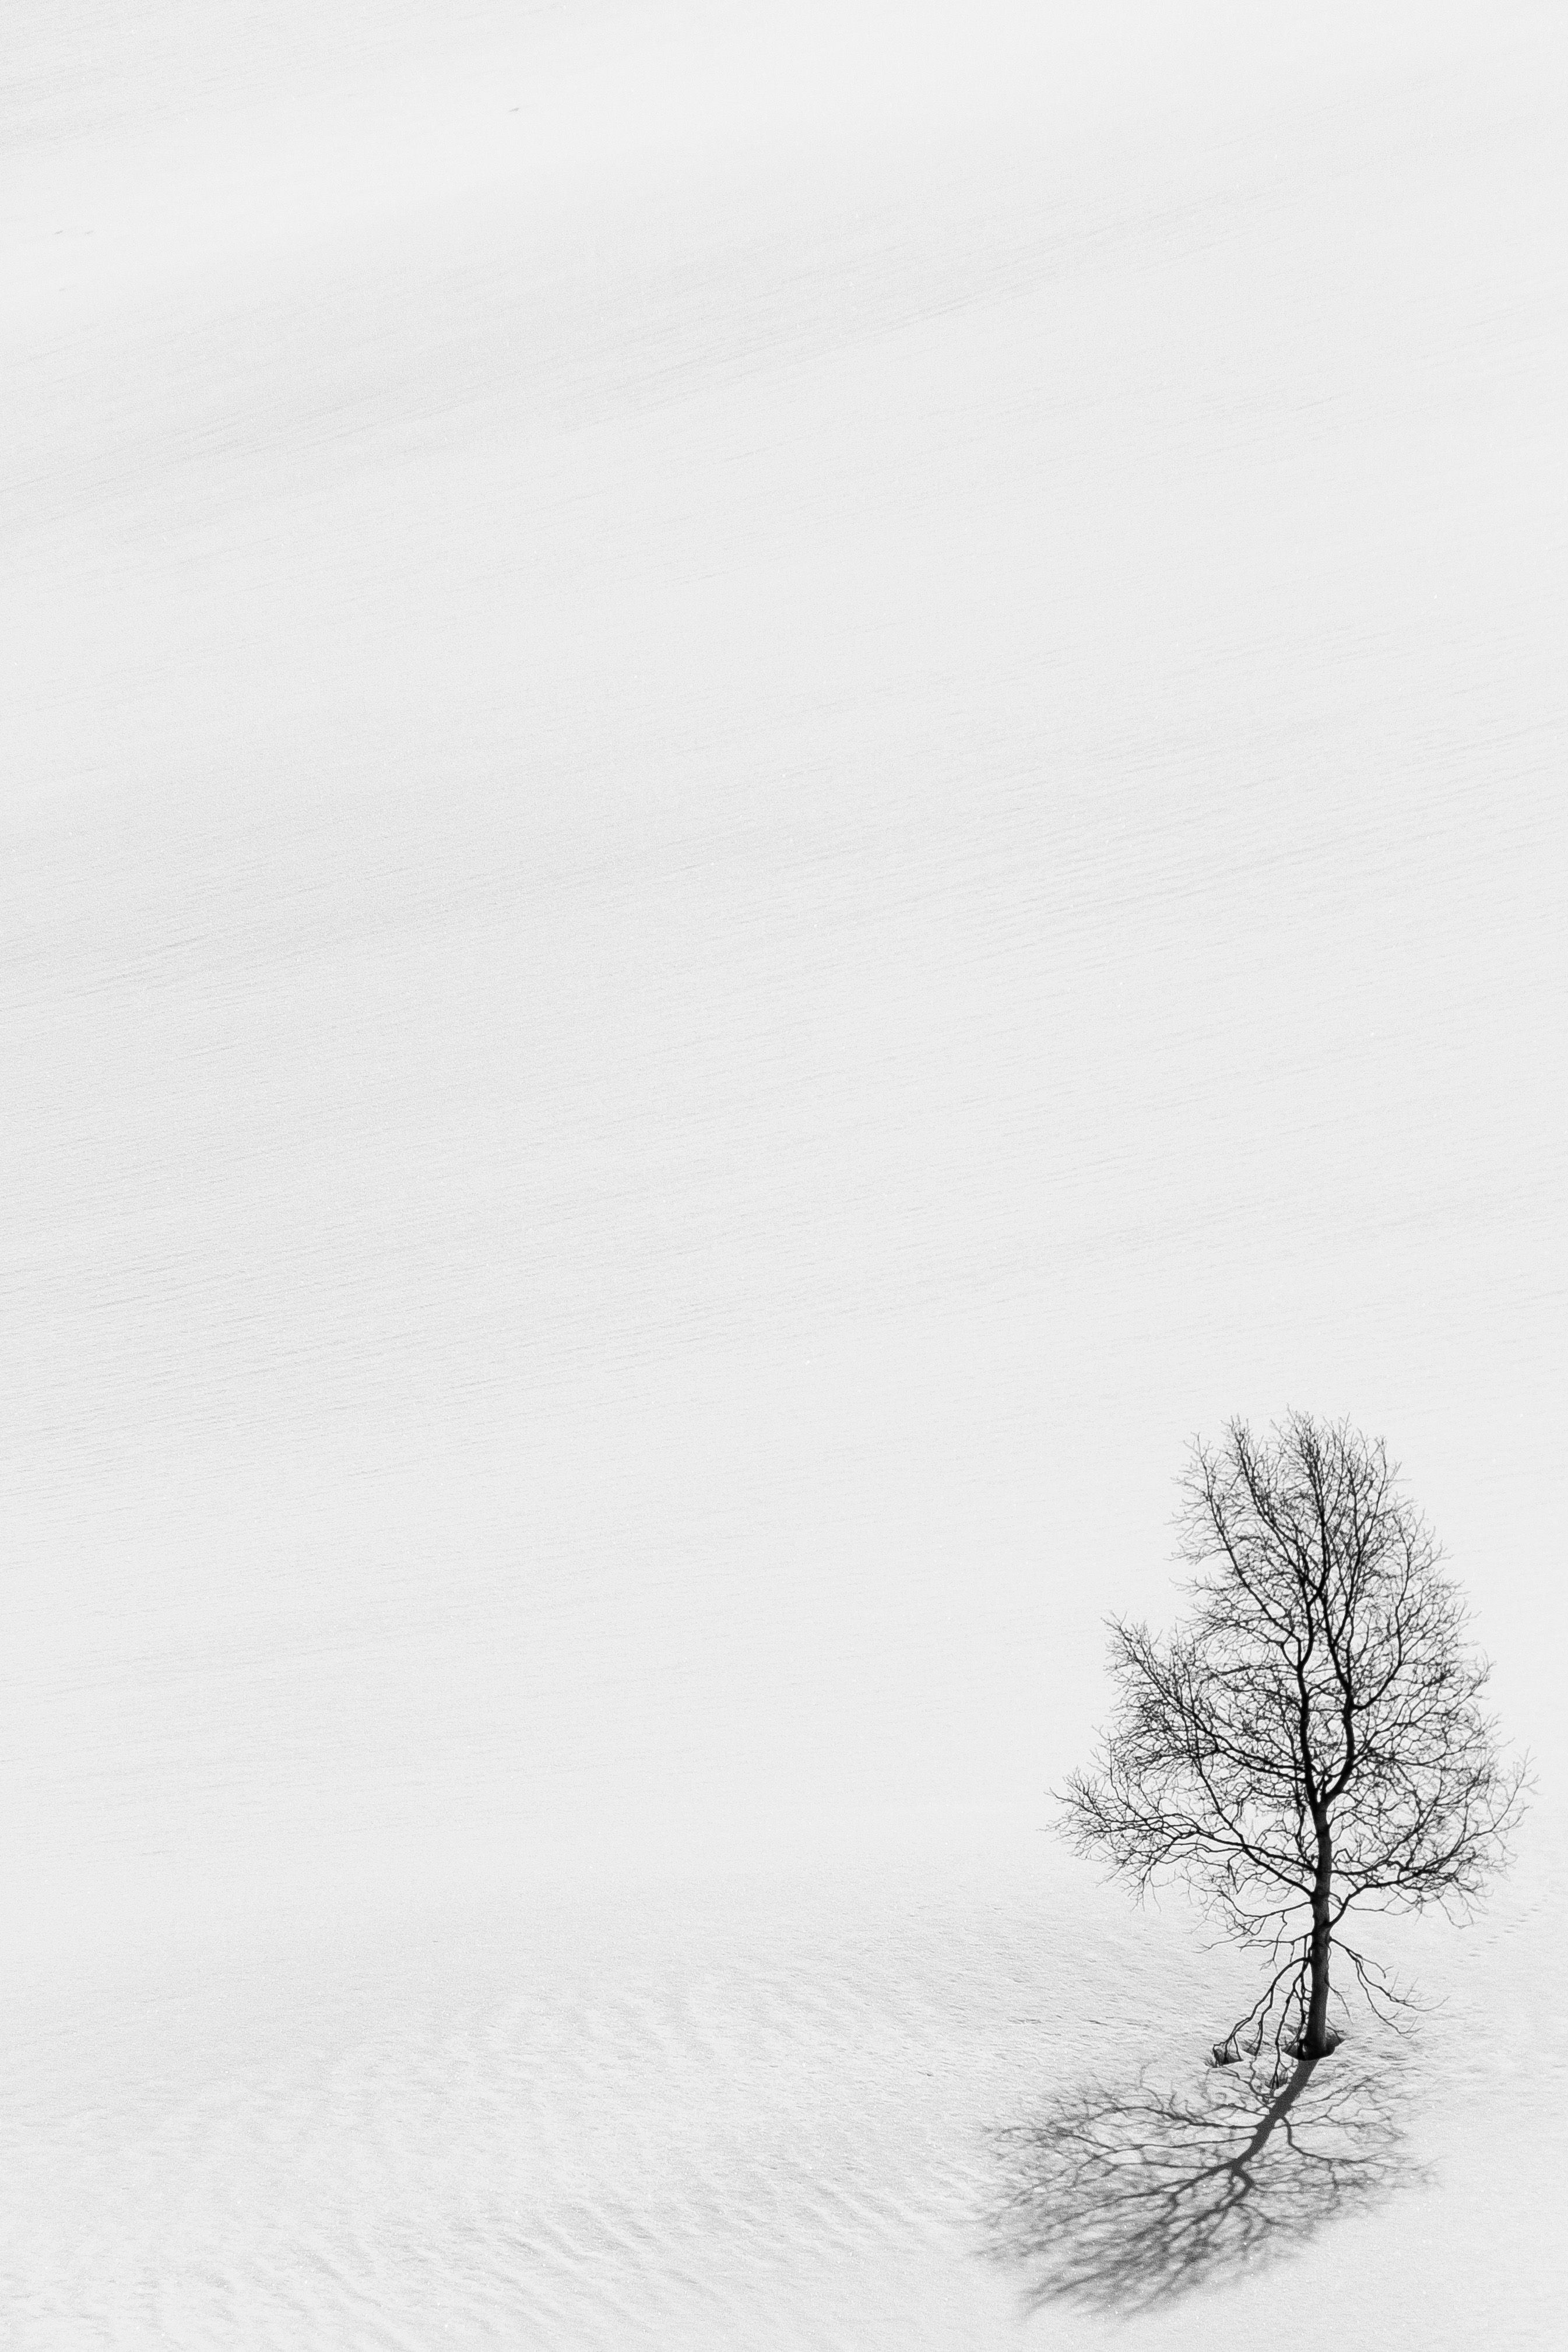 Download background chb, winter, nature, snow, wood, tree, minimalism, bw